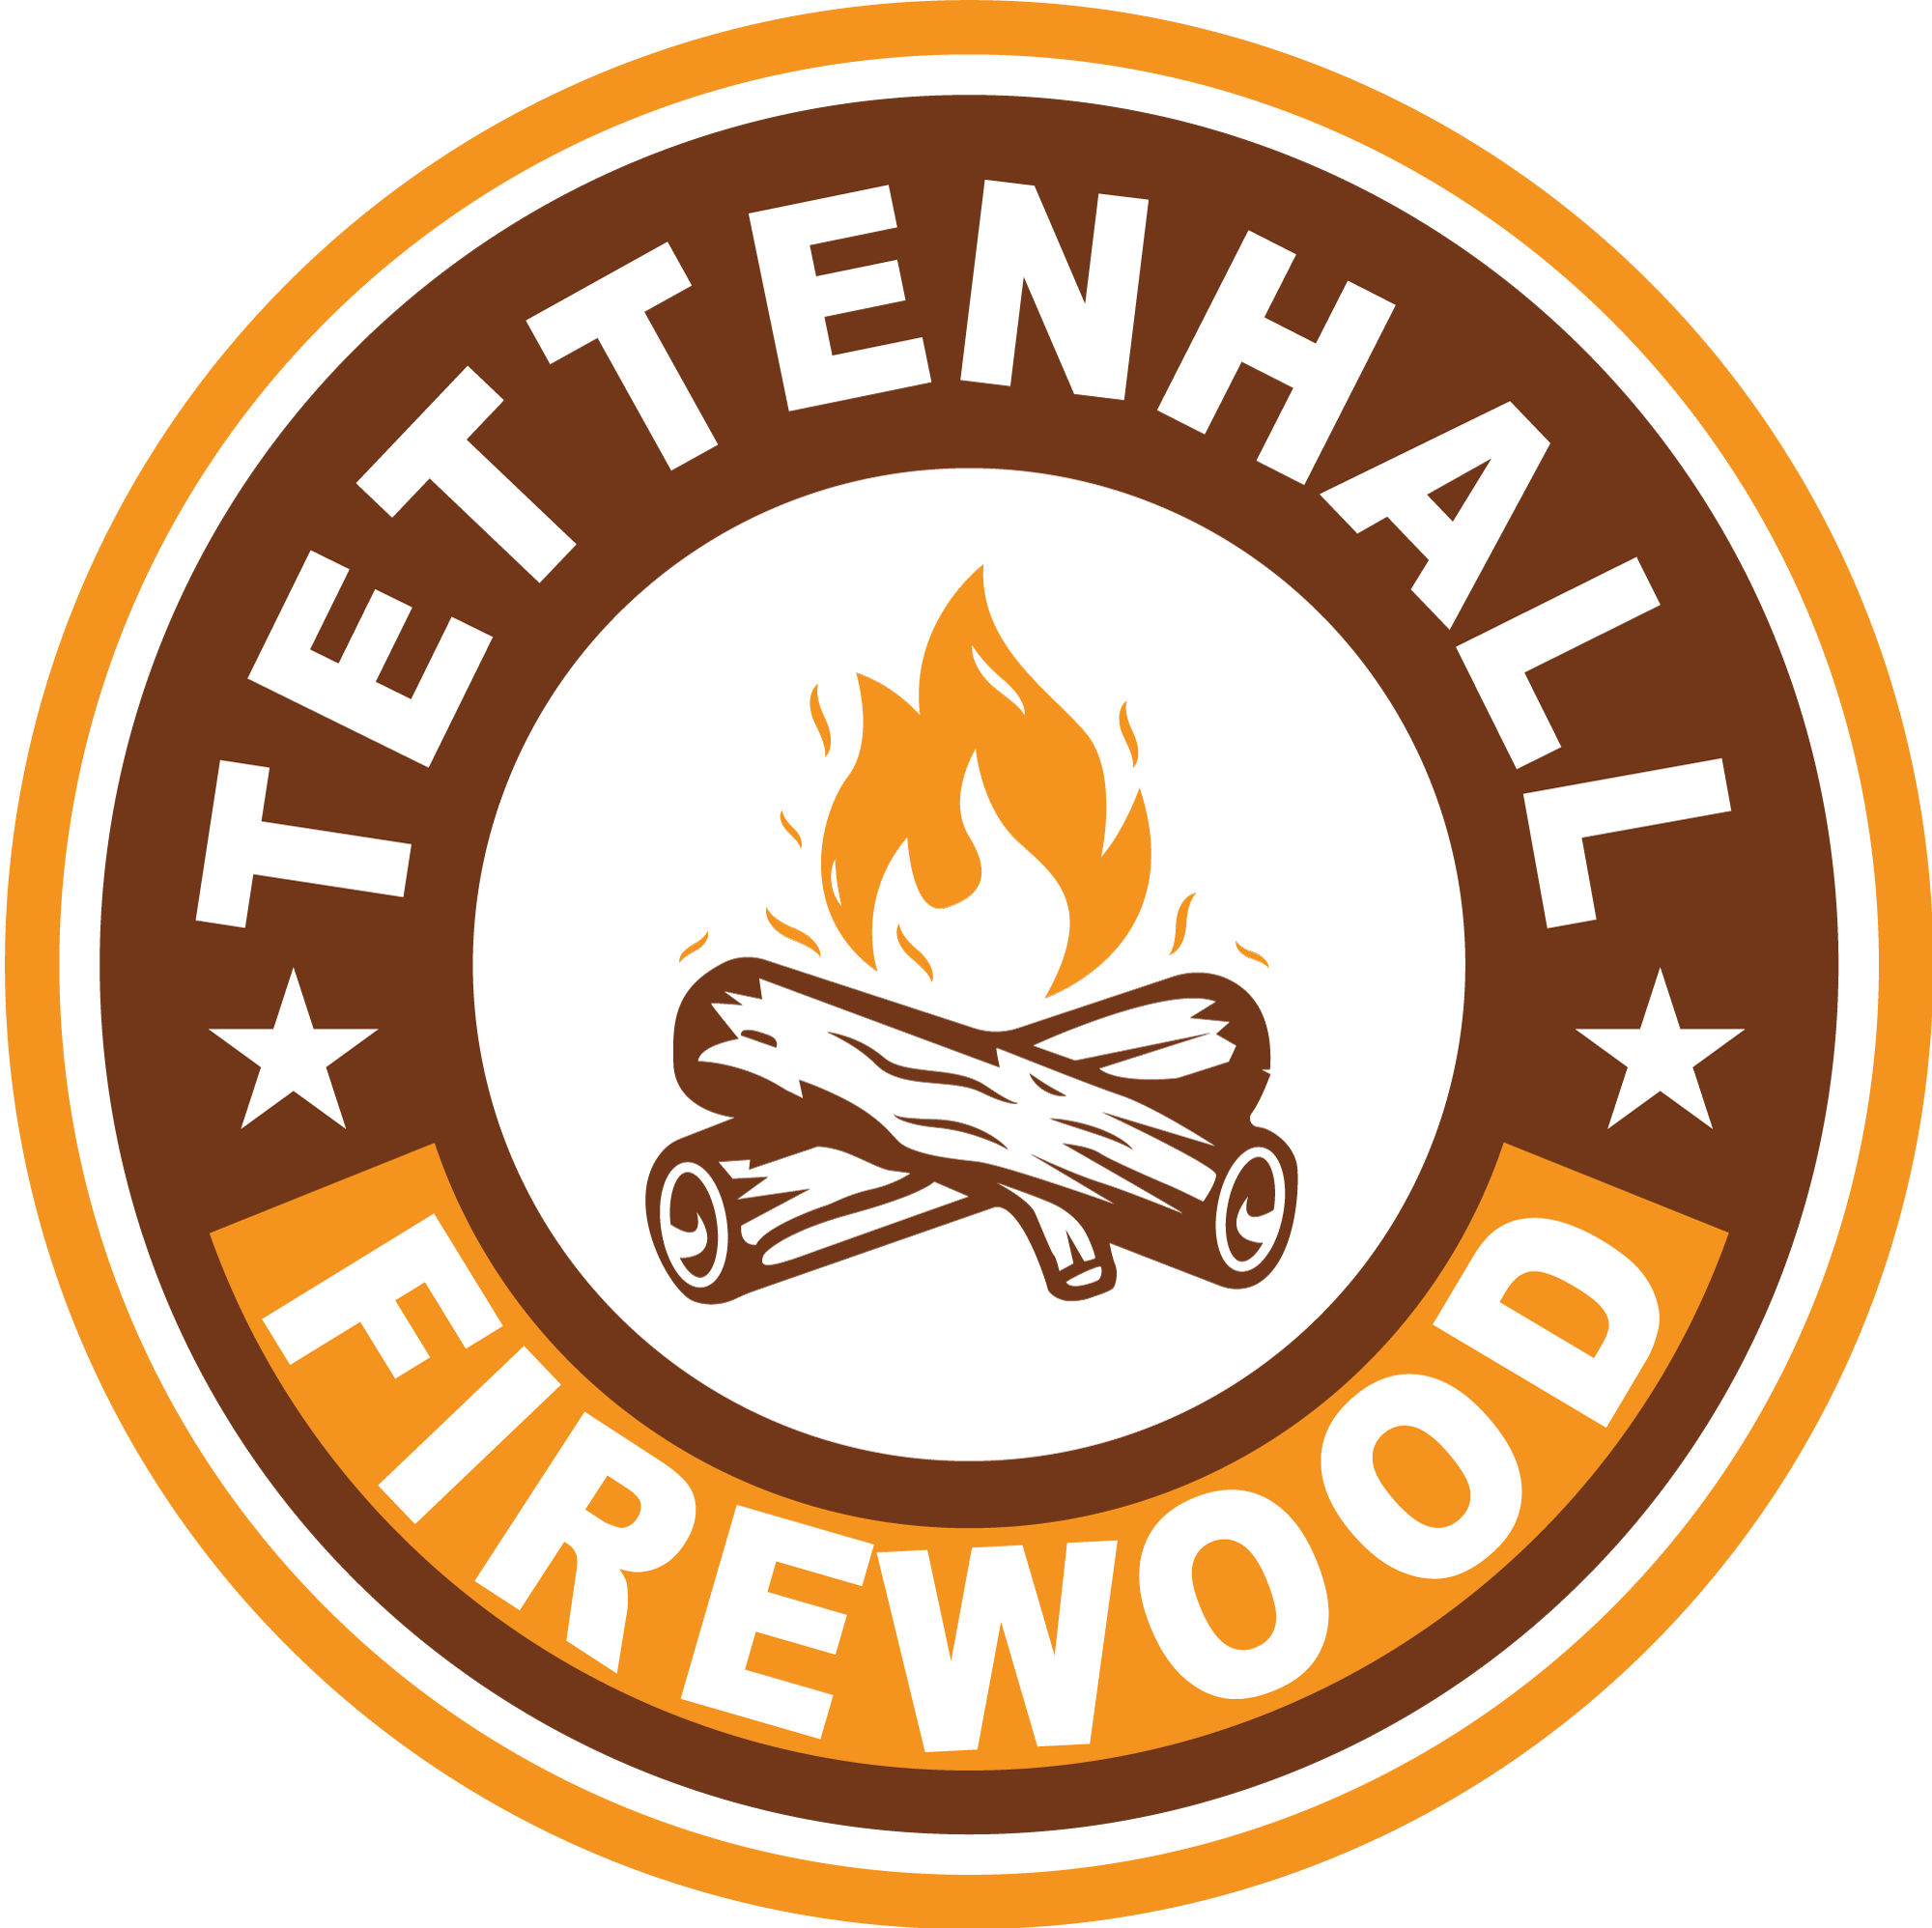 Tettenhall Firewood